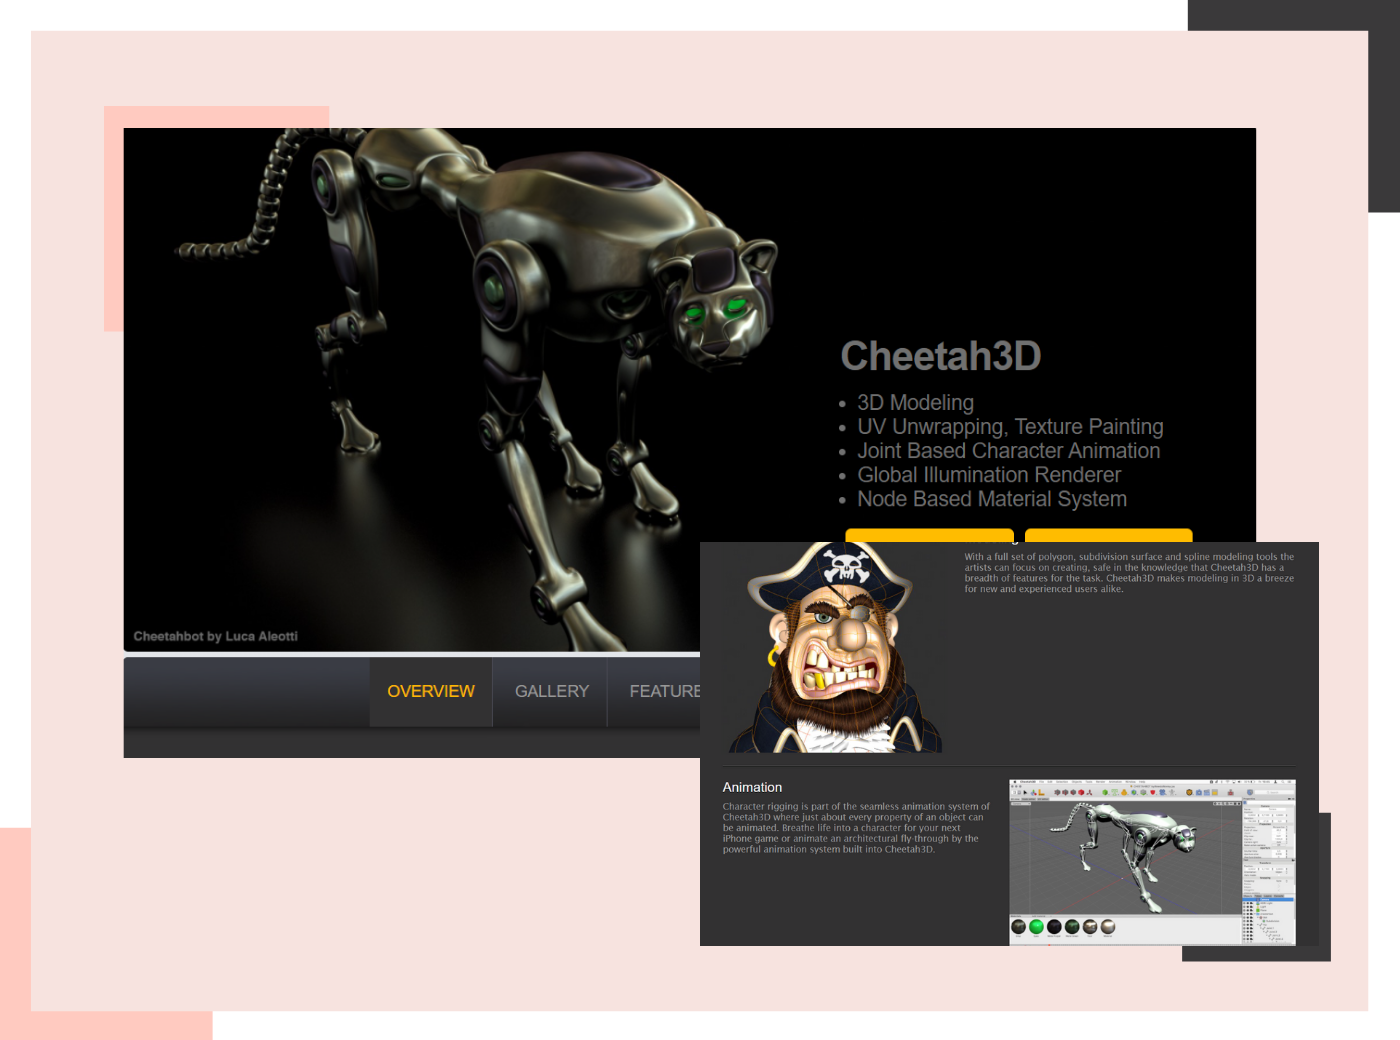 Cheetah 3D rendering software